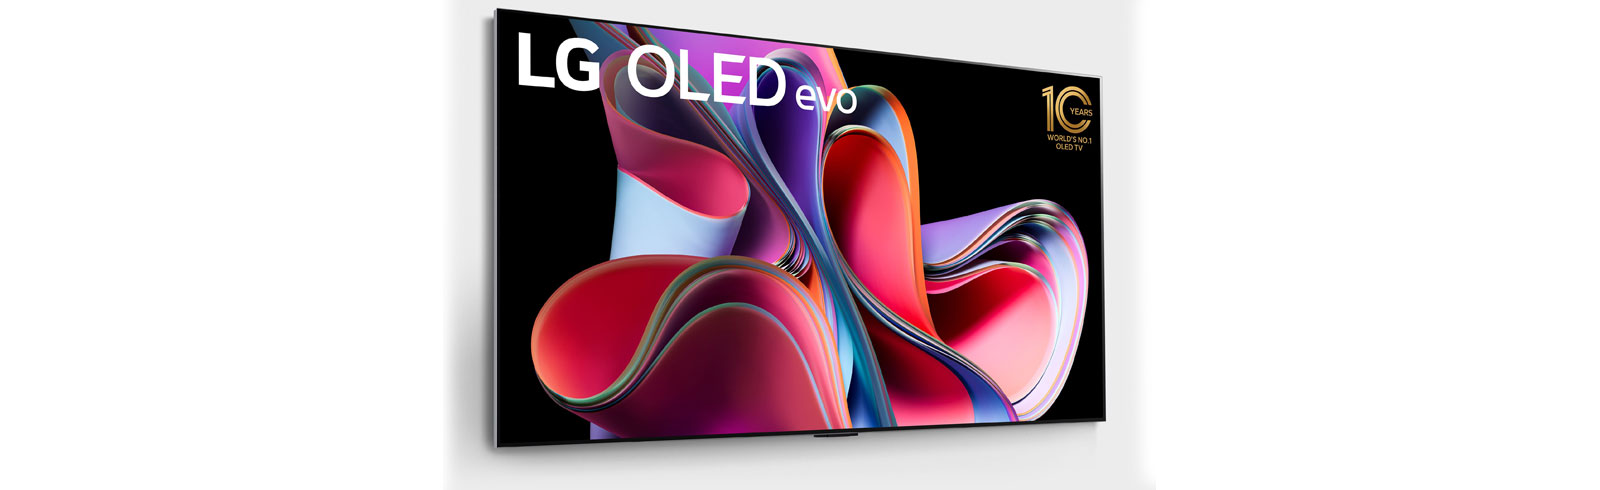 LG welcomes more competition entering OLED TV market